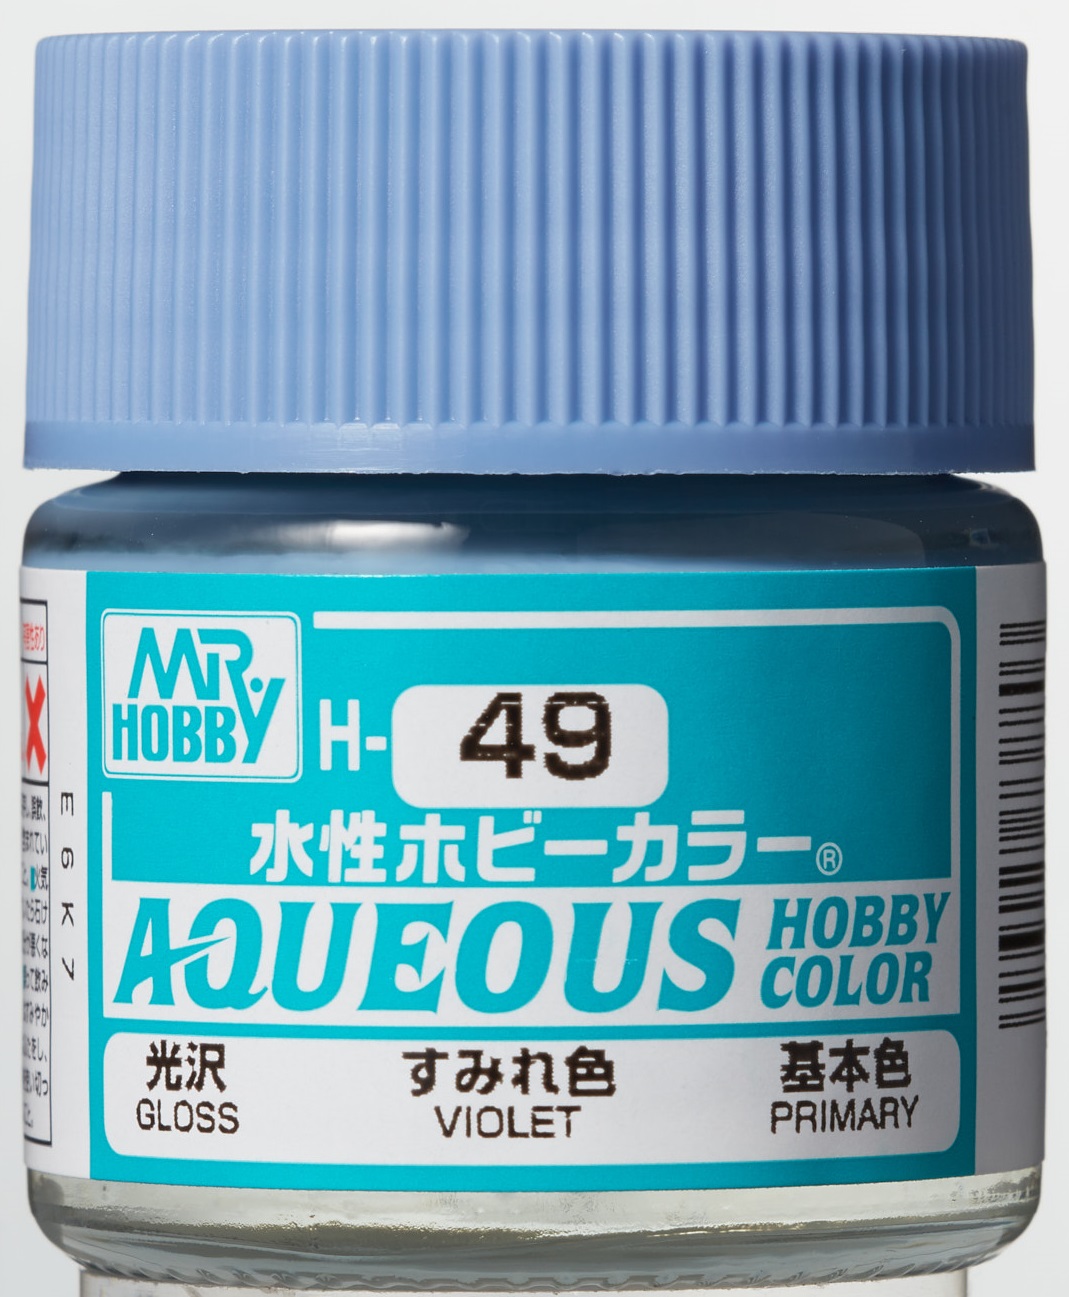 Mr. Aqueous Hobby Color - Violet - H49 - Violett